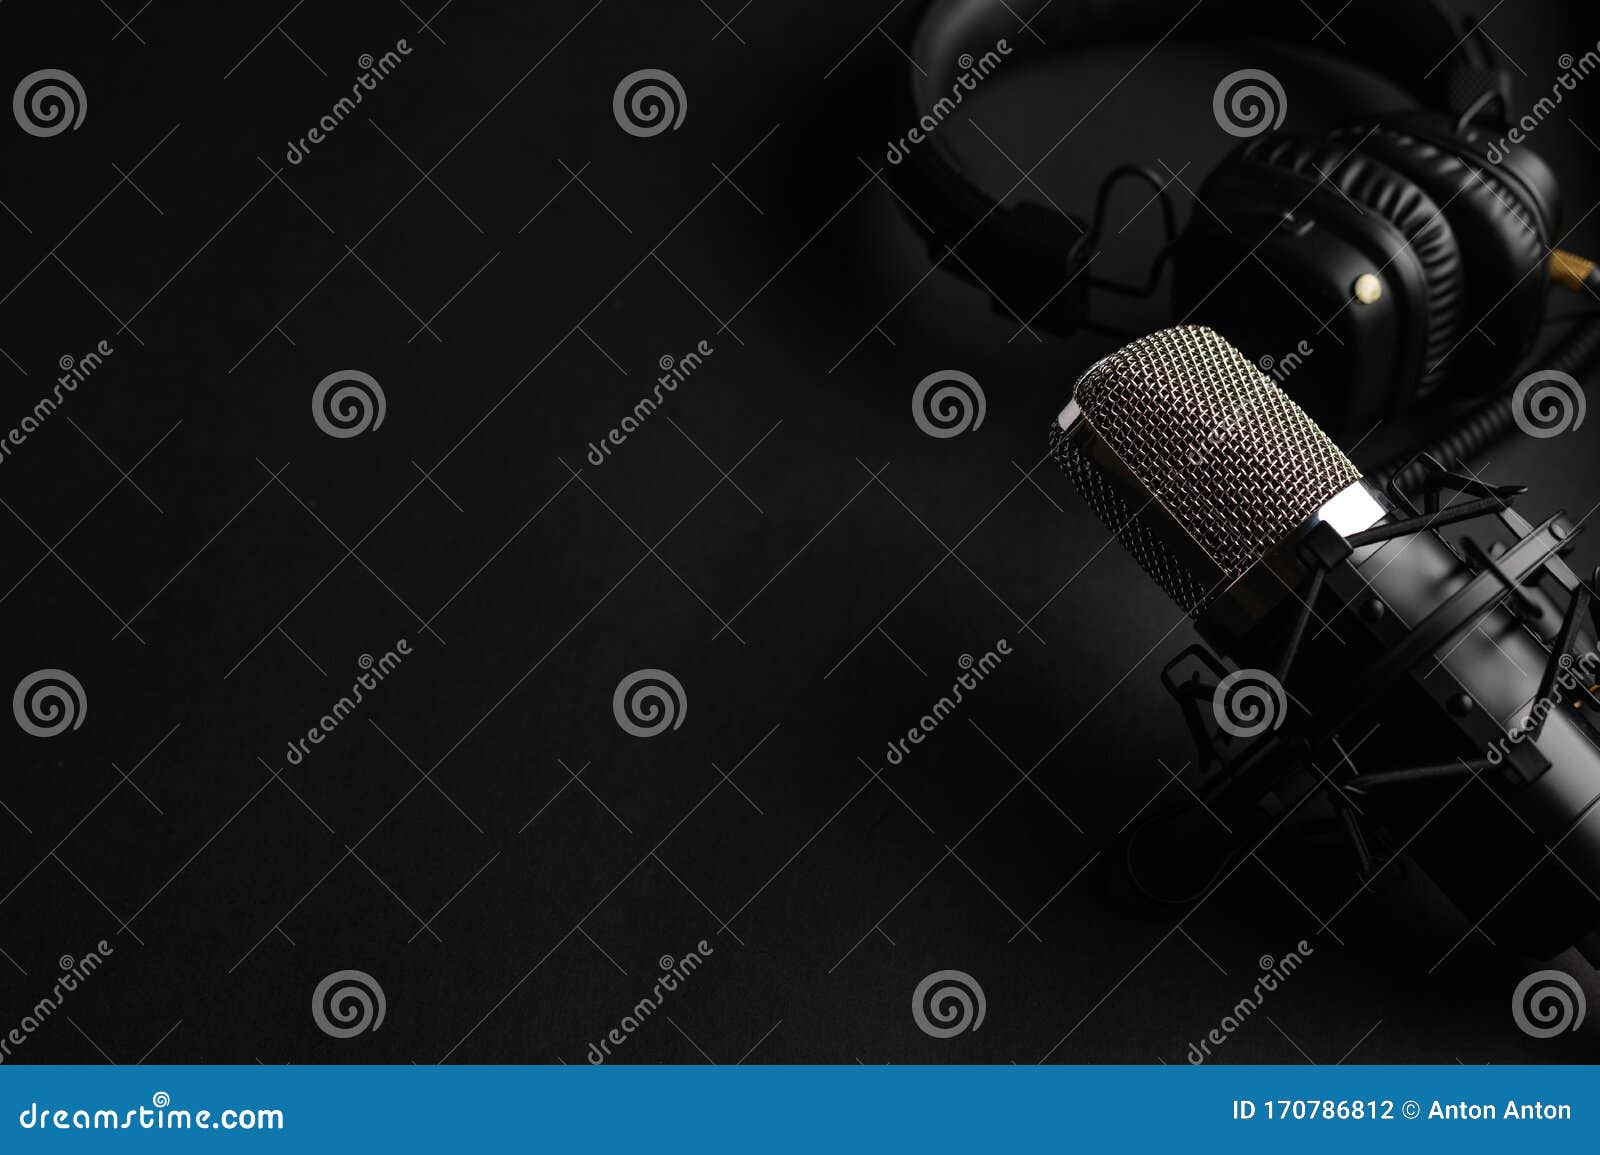 studio black studio microphone with studio headphones on a black background. banner. radio, work with sound, podcasts